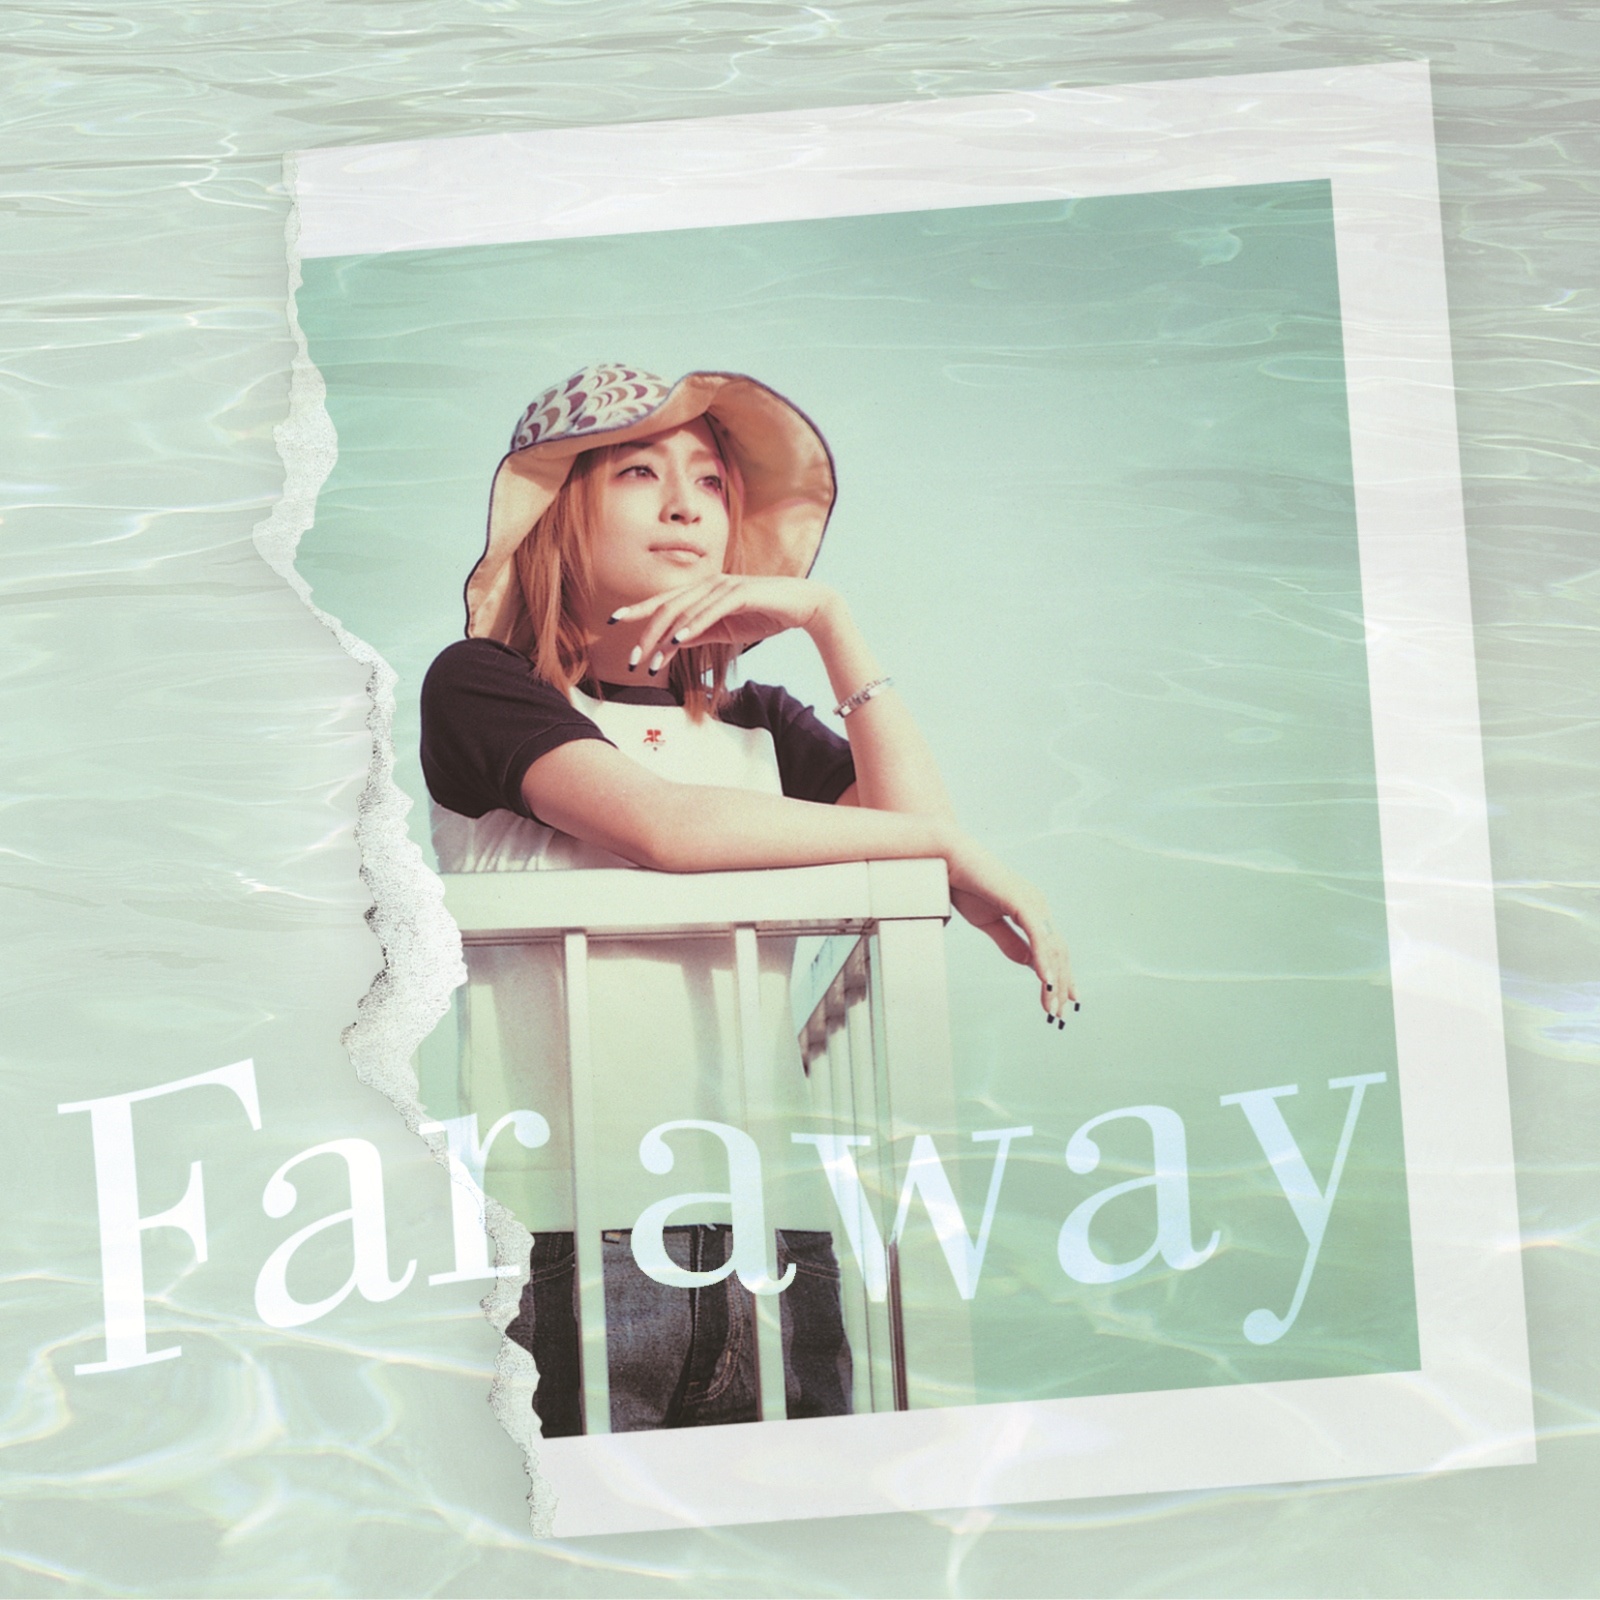 Far away - Original Mix/Instrumental